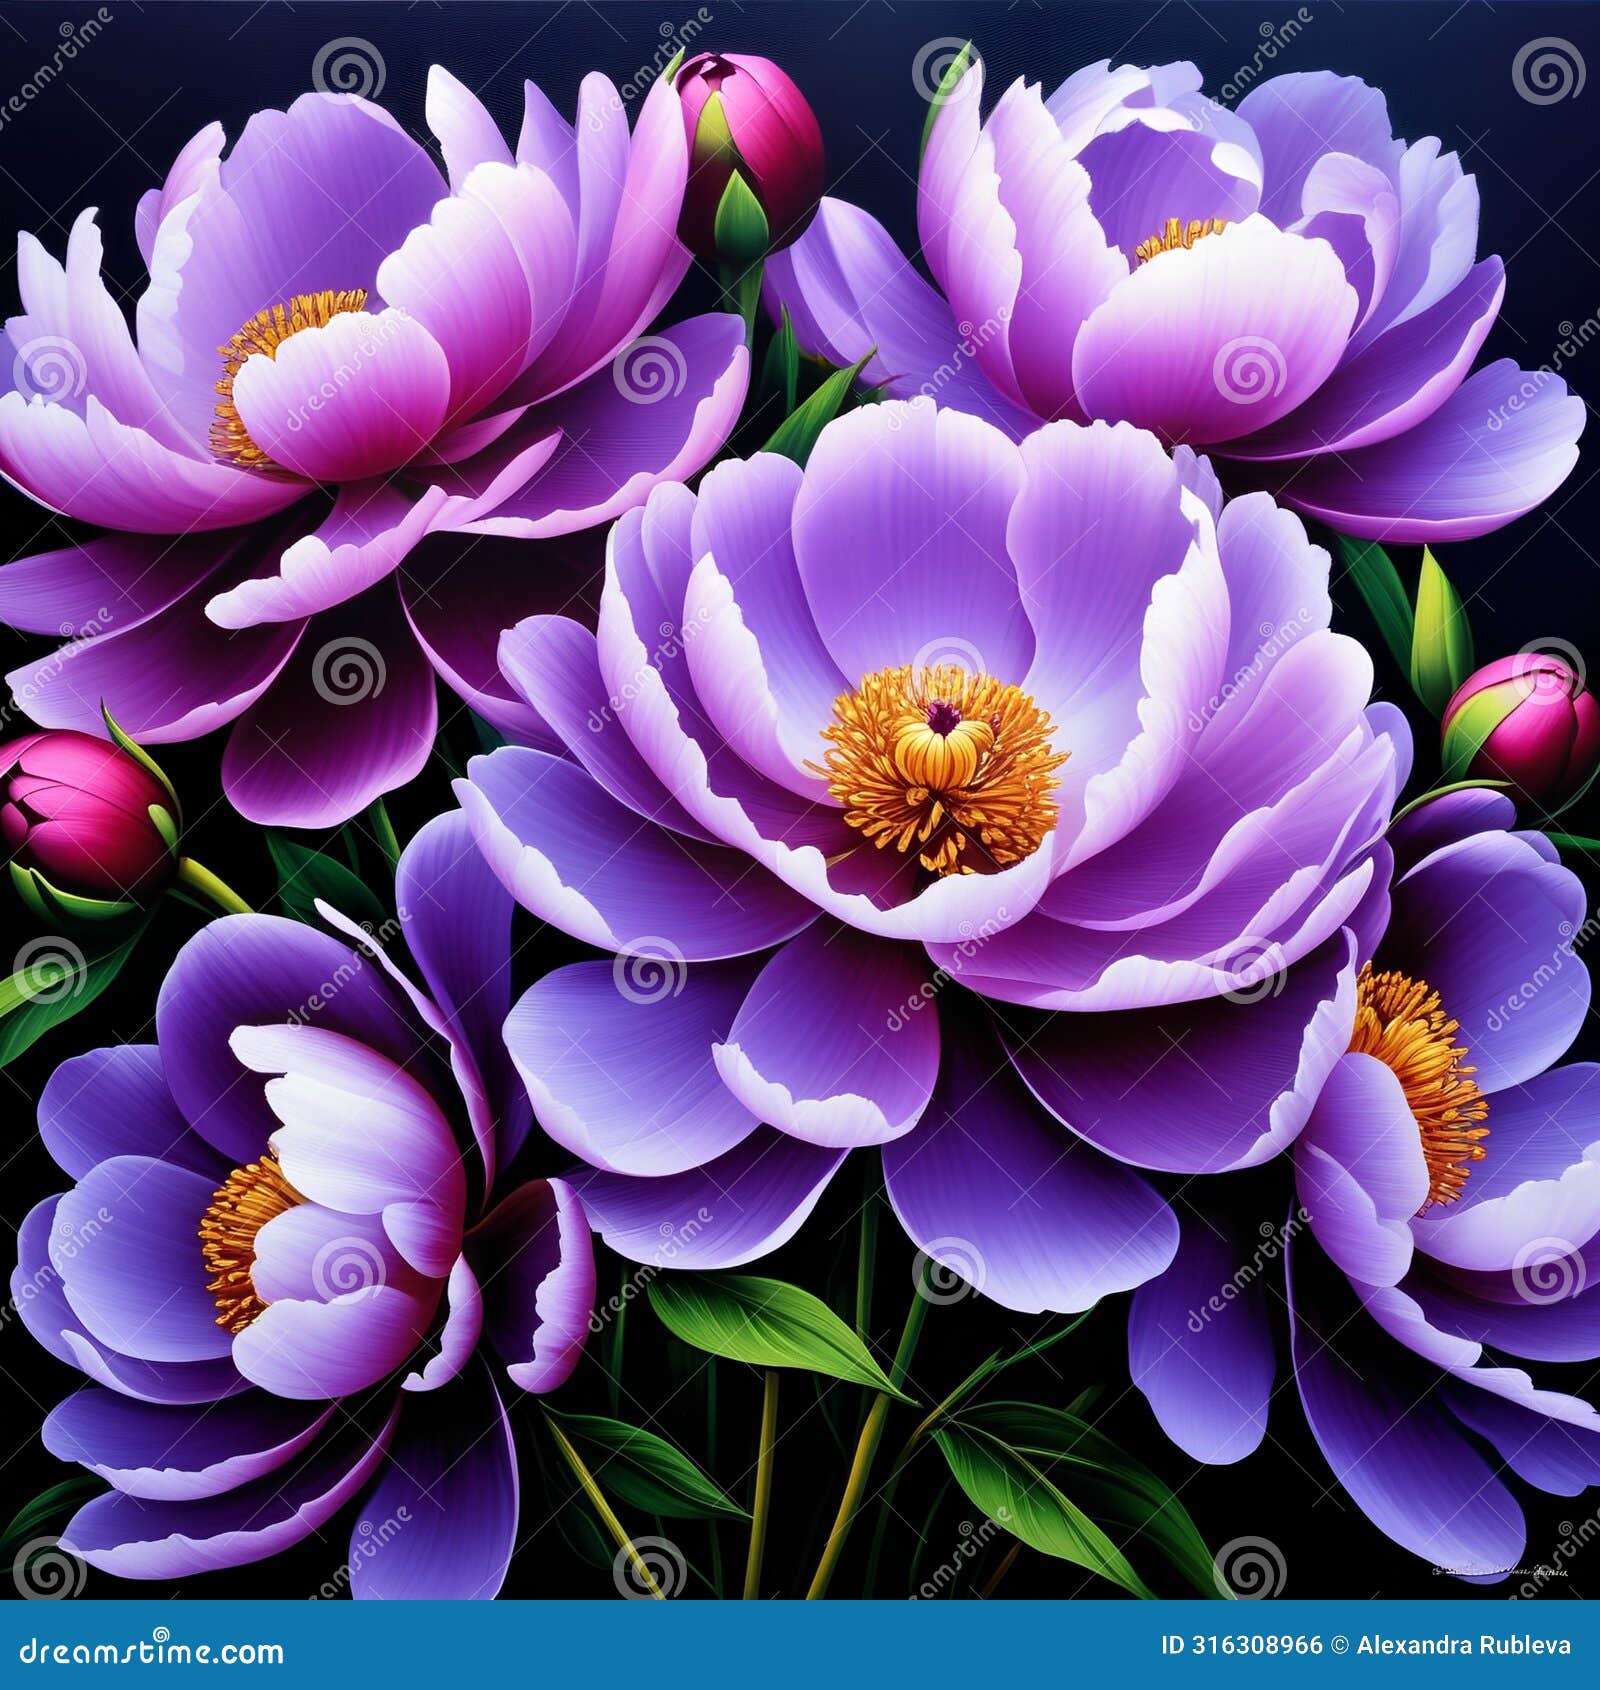 light purple lavender peonies peony flowers  watercolor  painting botanical art transparent white